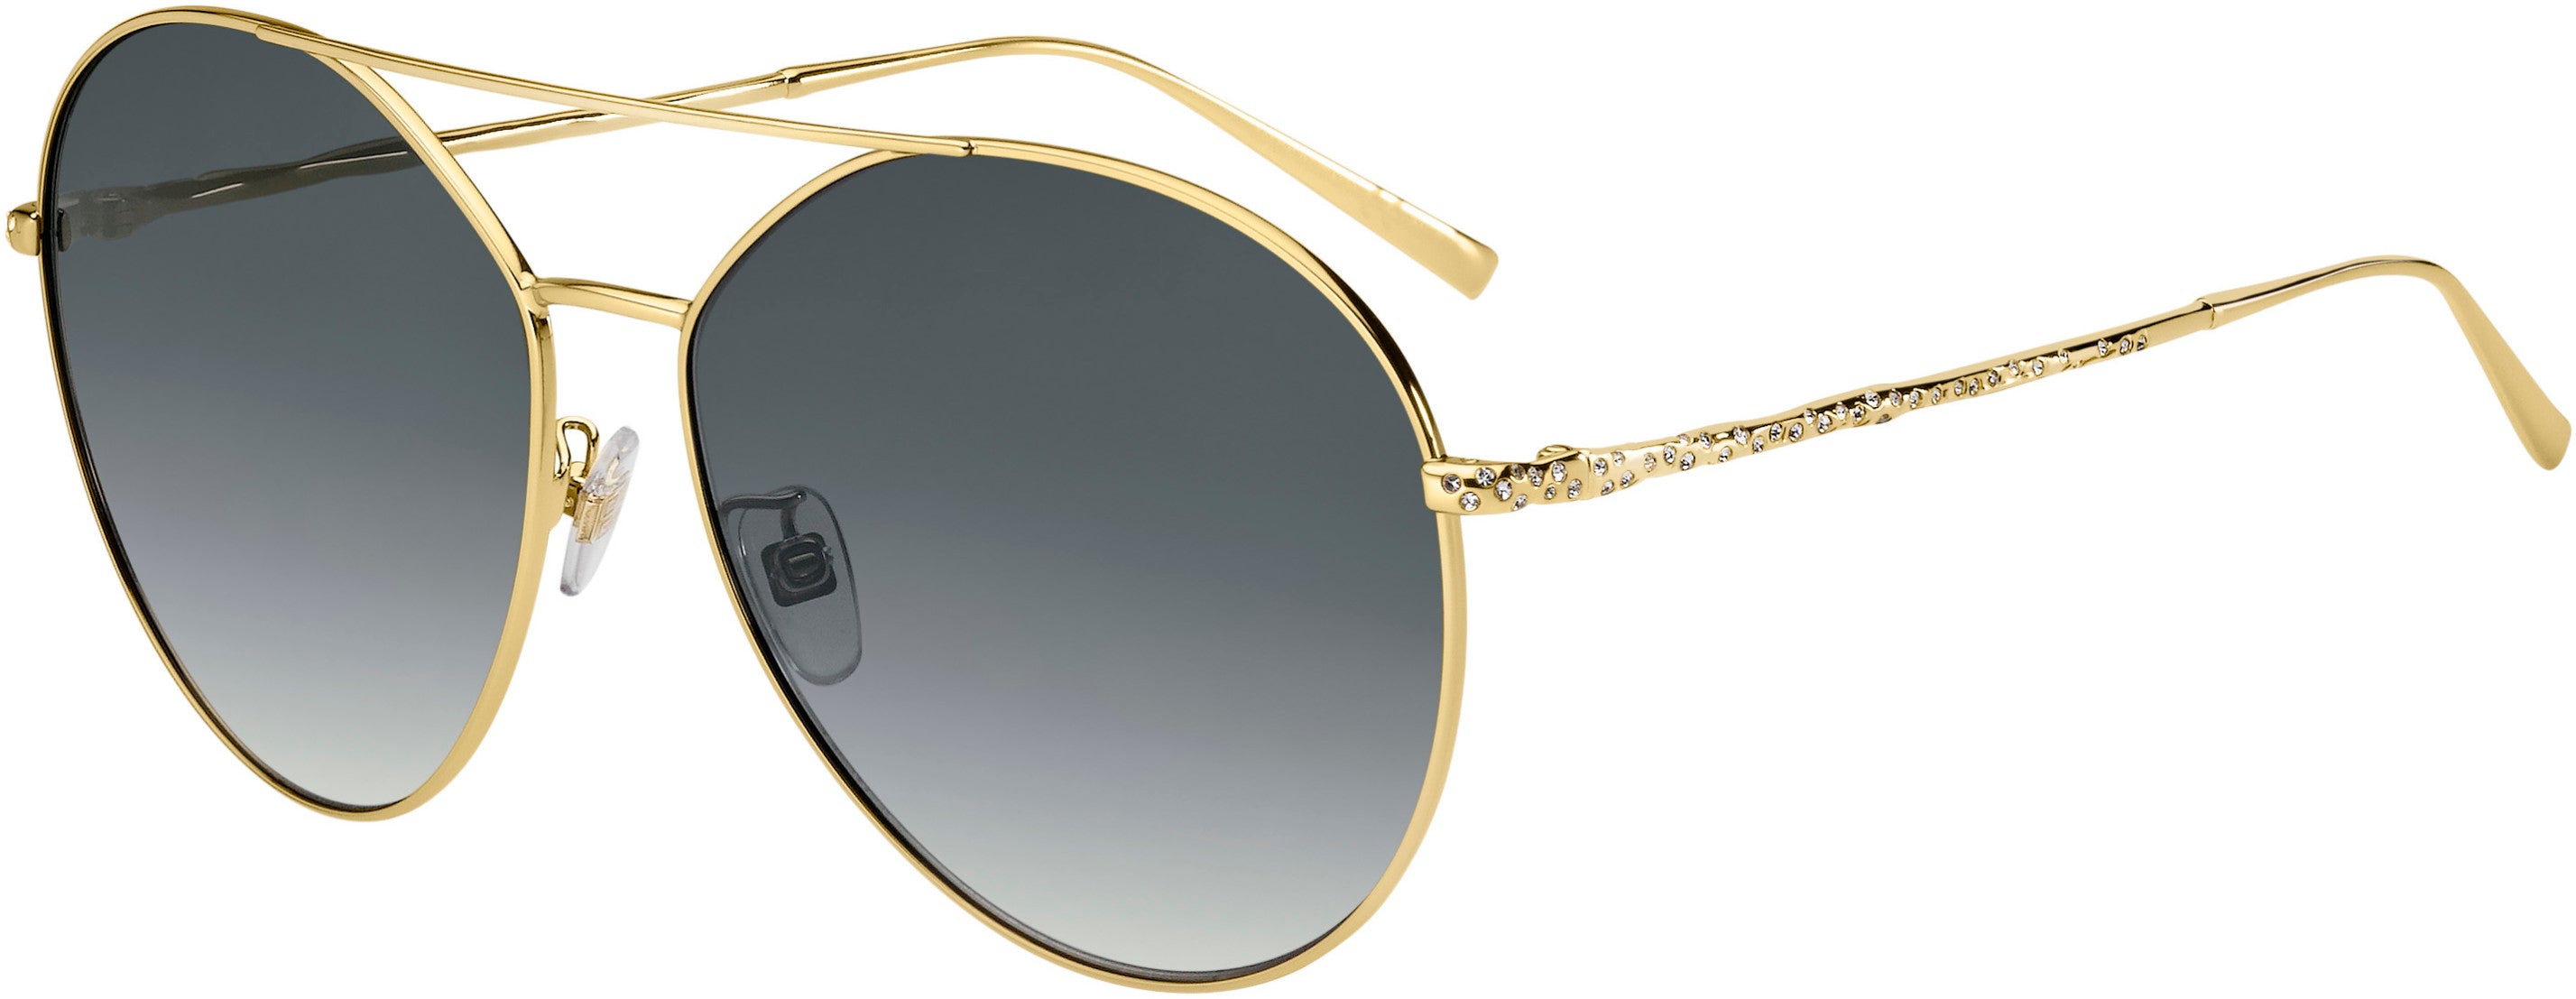  Givenchy 7170/G/S Oval Modified Sunglasses 02F7-02F7  Gold Gray (9O Dark Gray Gradient)